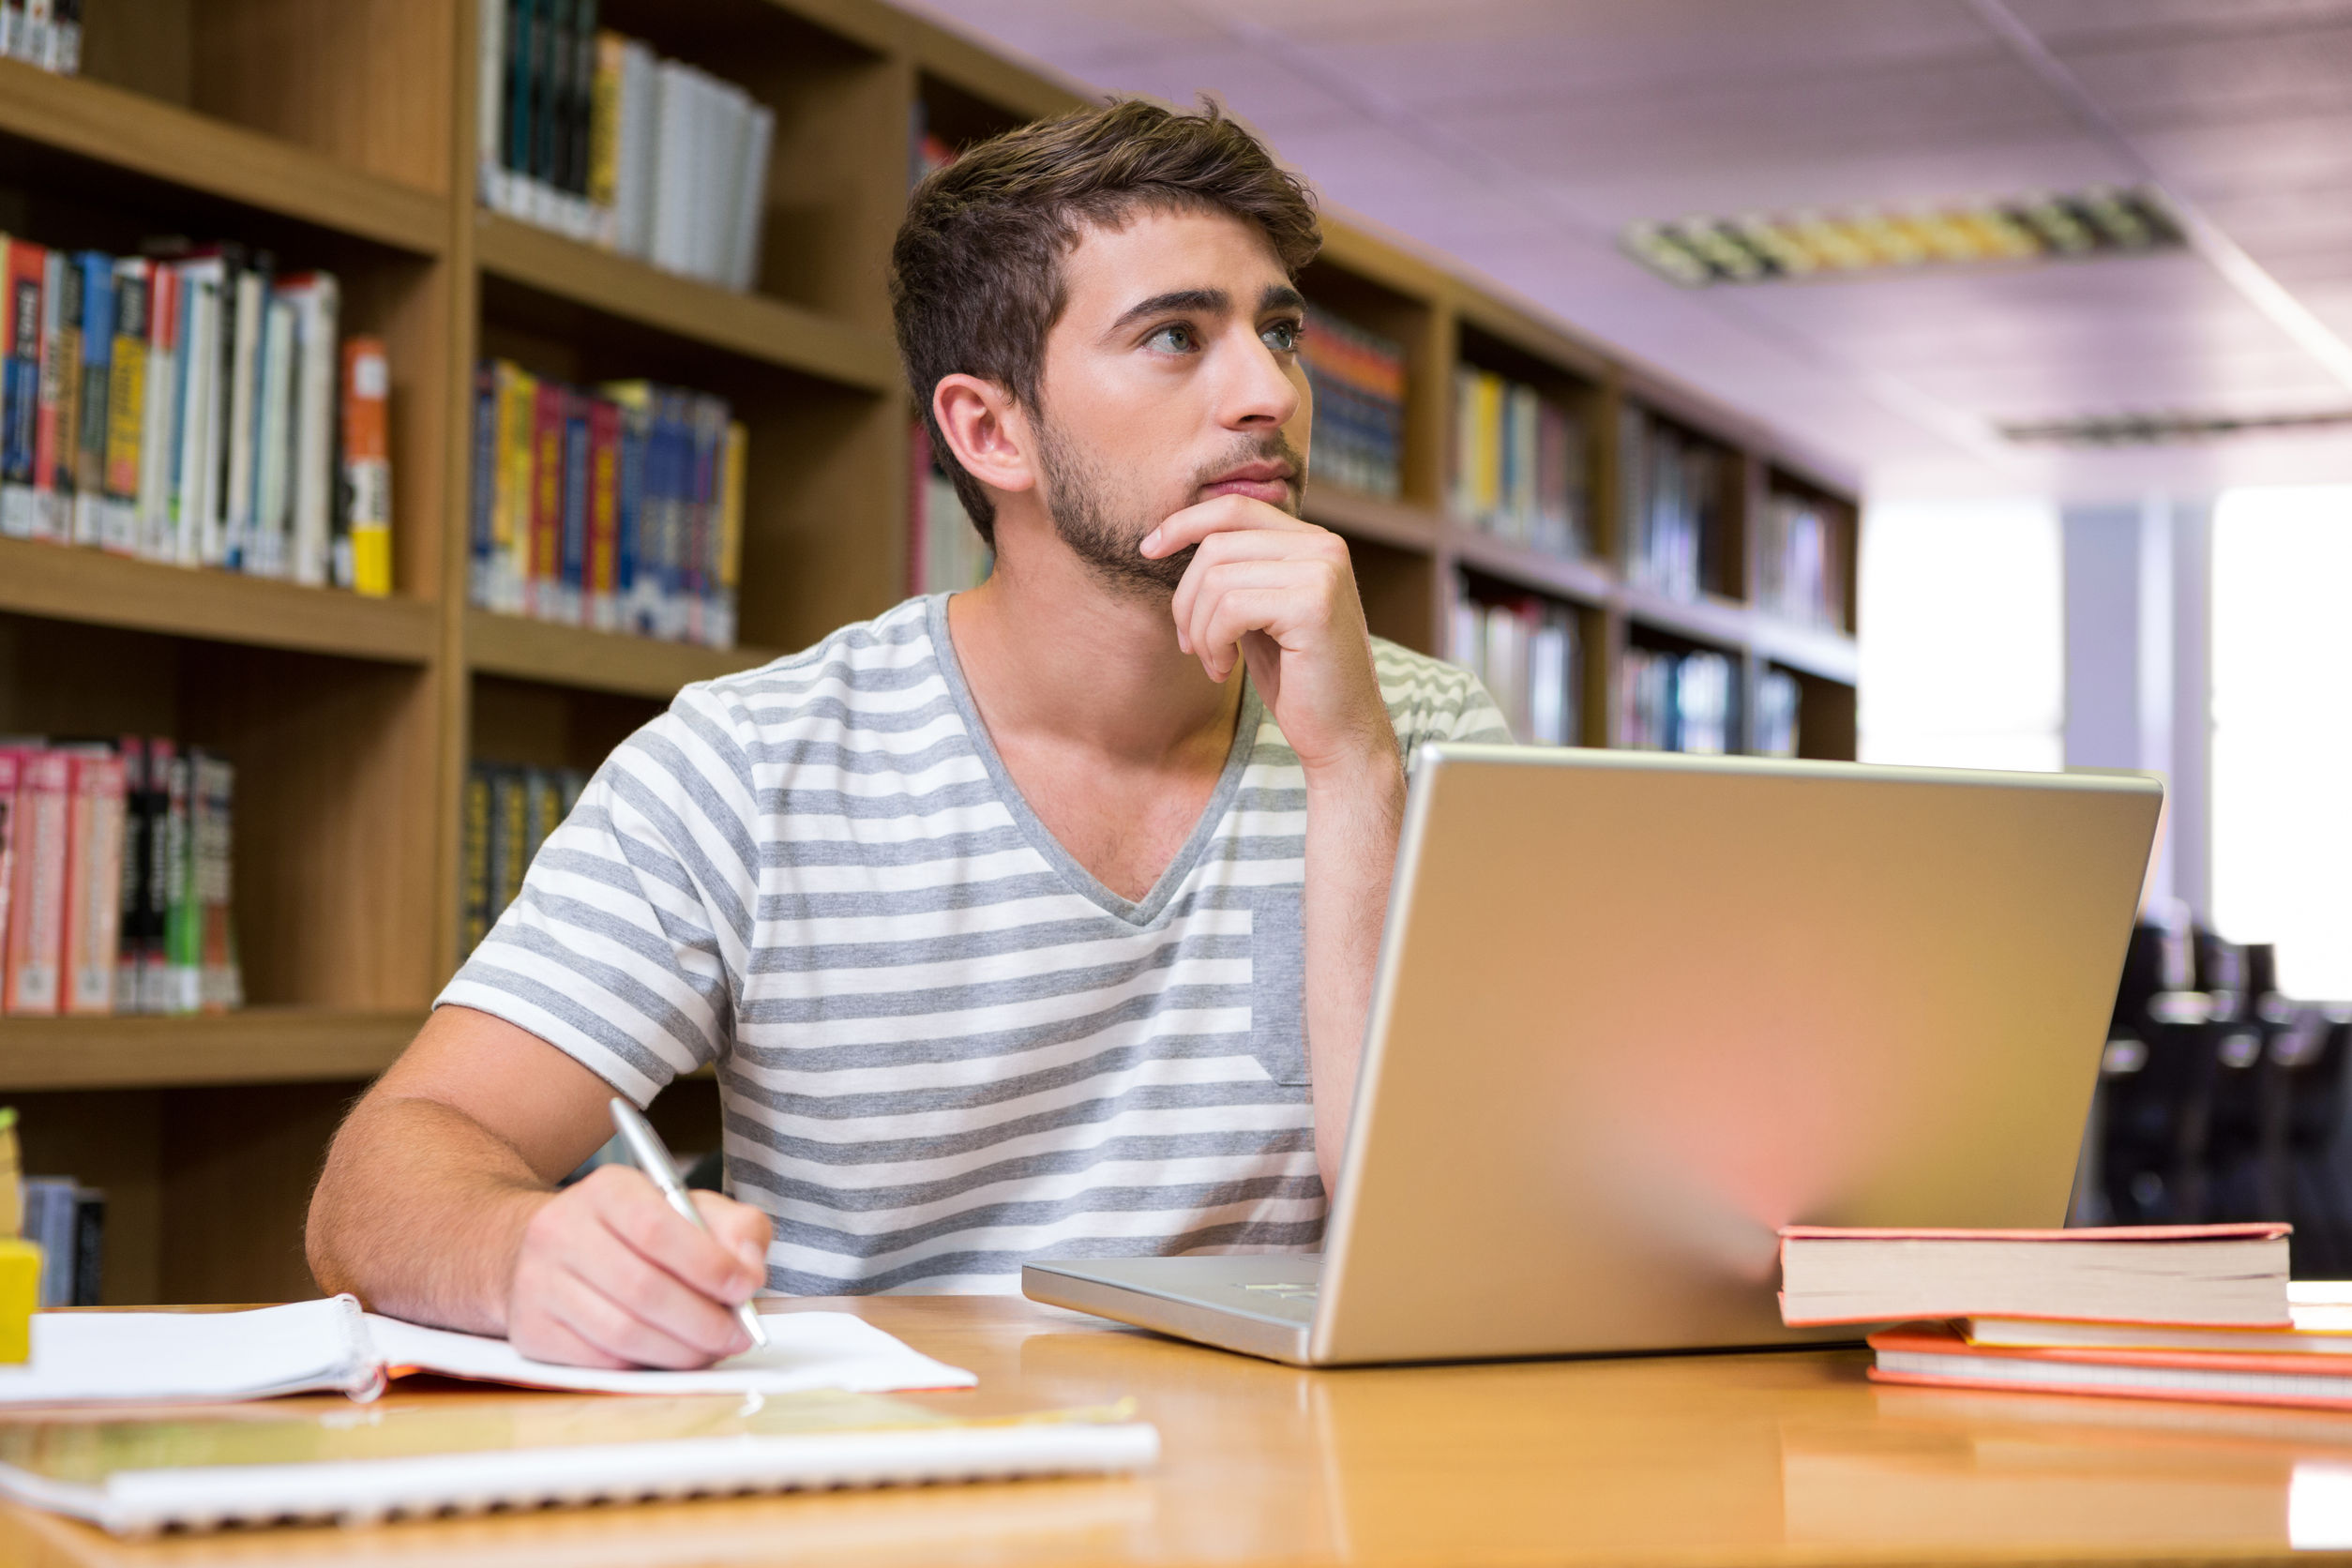 Biology tutor encourages student during online